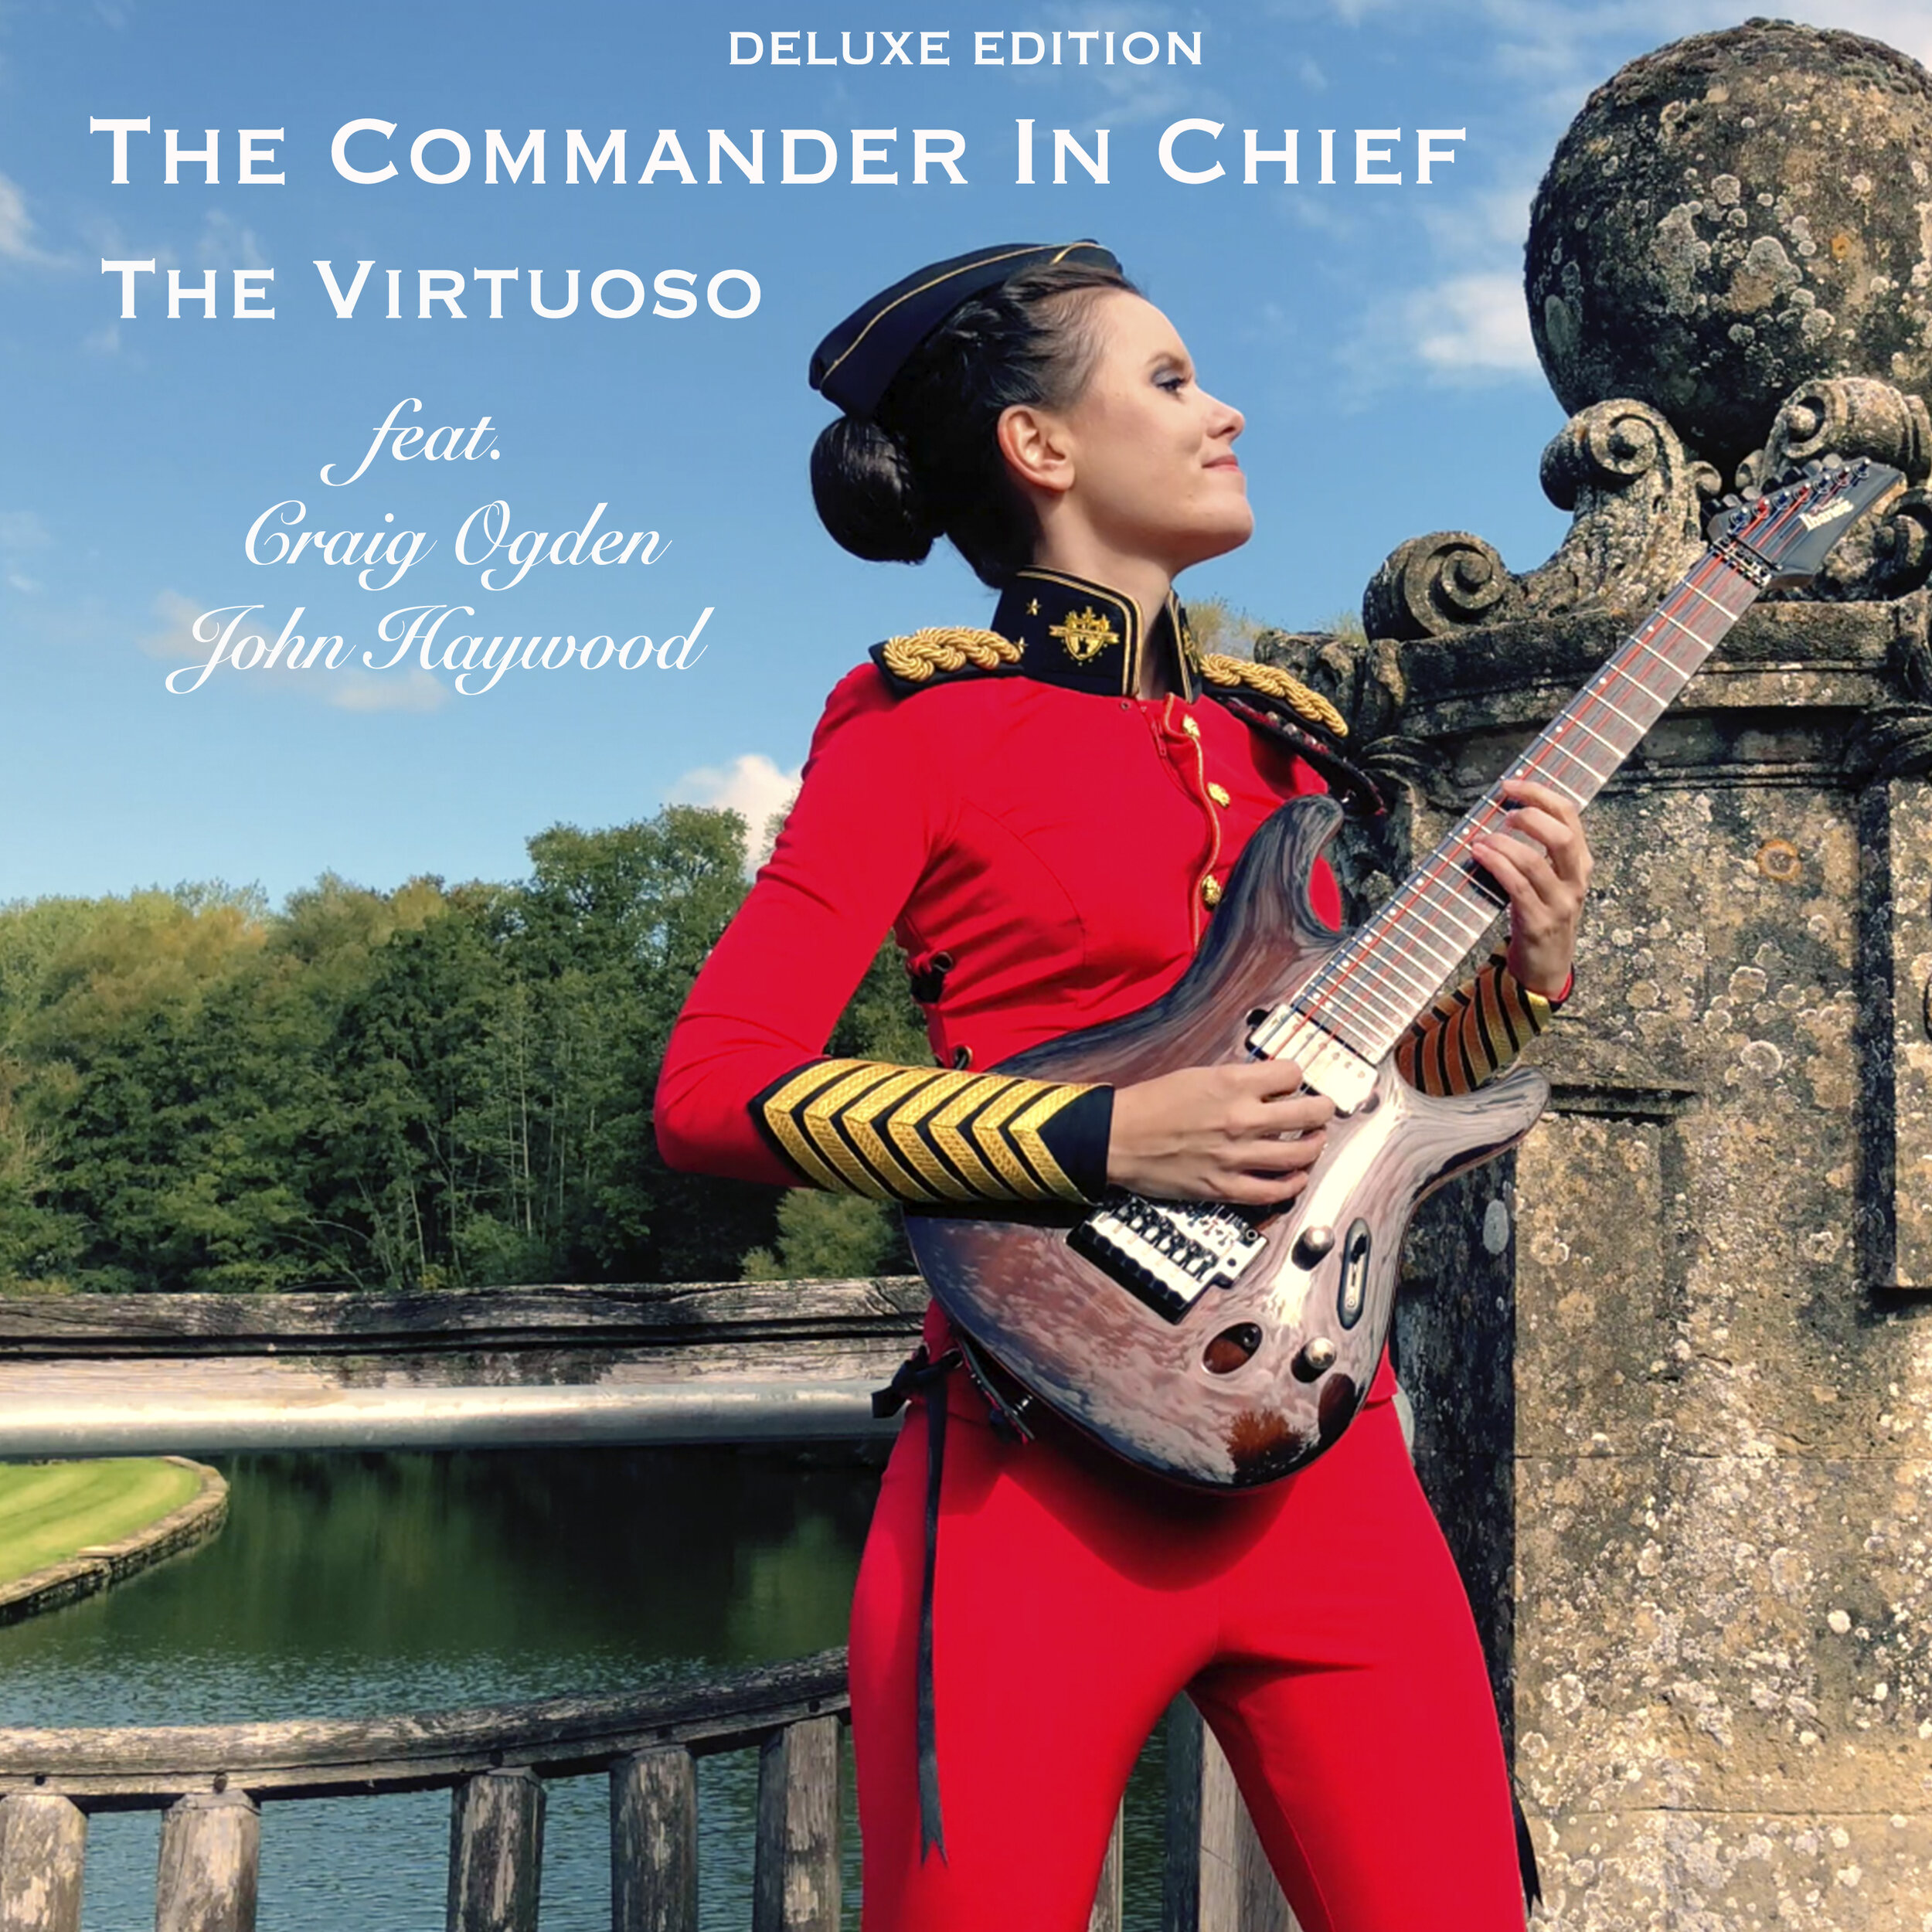 The Virtuoso - Album cover.jpg